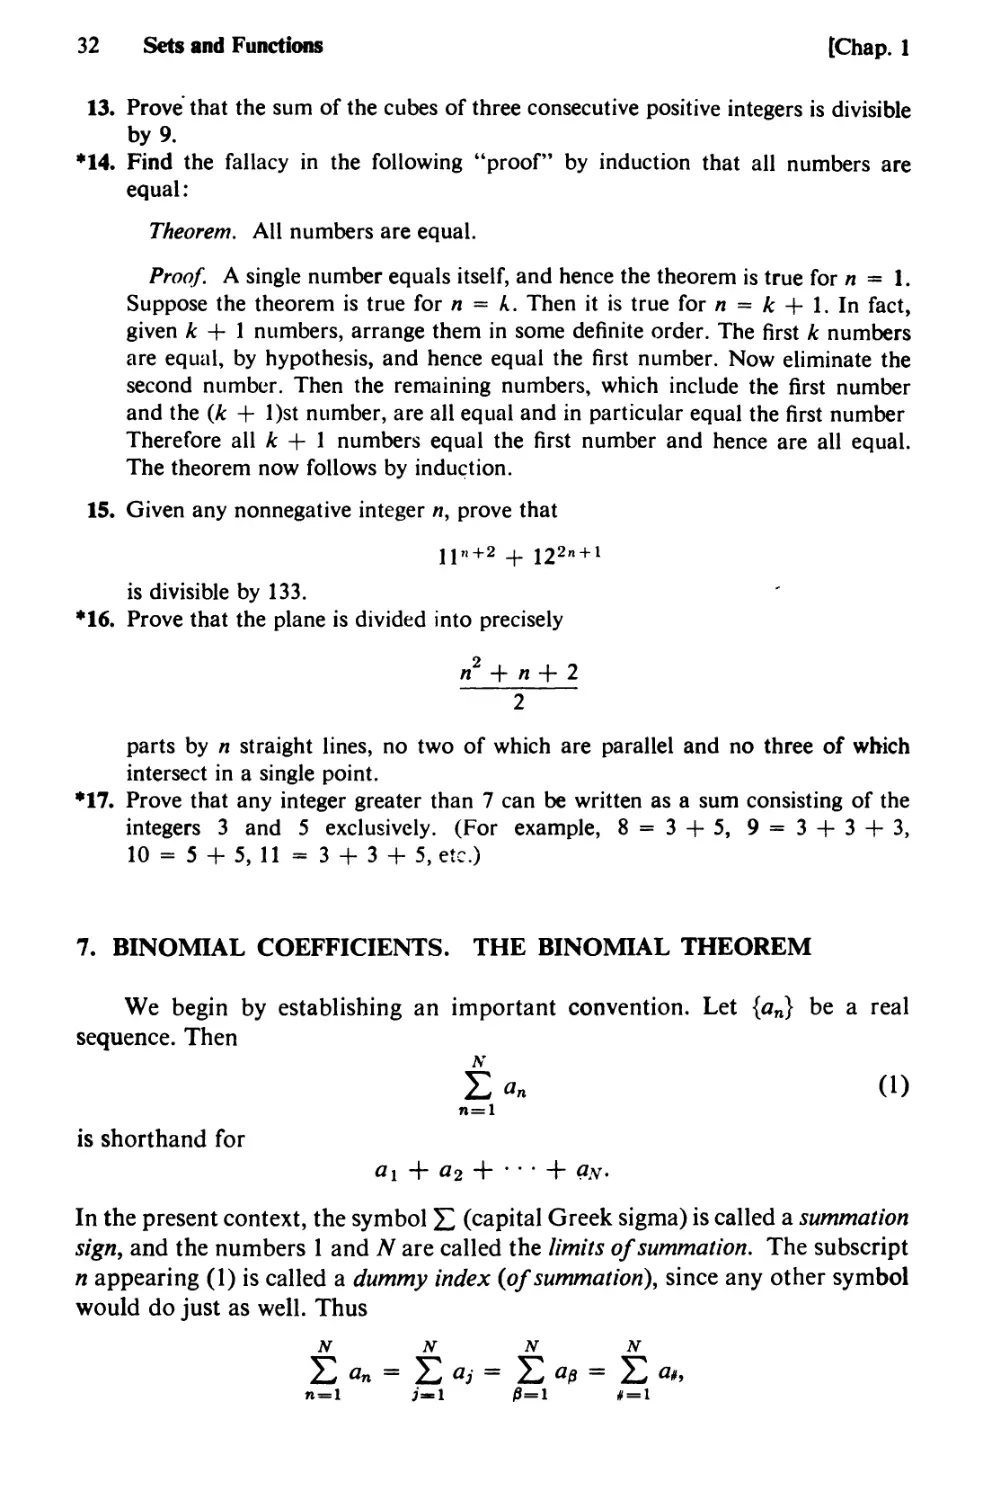 7. Binomial Coefficients. The Binomial Theorem